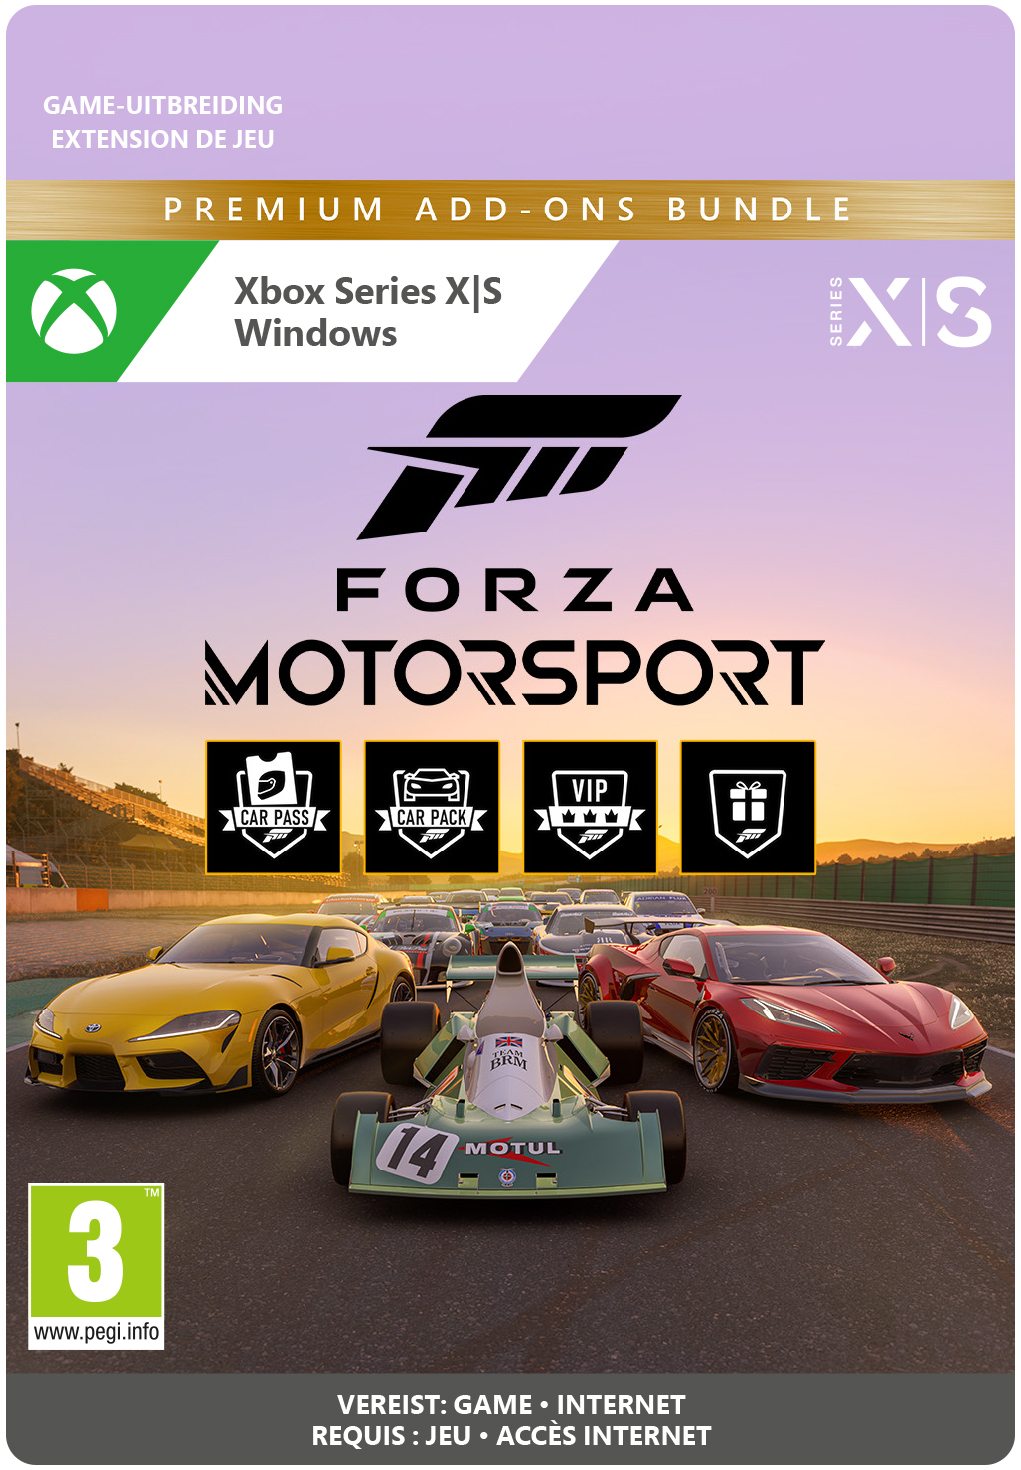 Forza Motorsport Premium Bundle Add-On - Xbox Series X|S/PC (Digitaal)